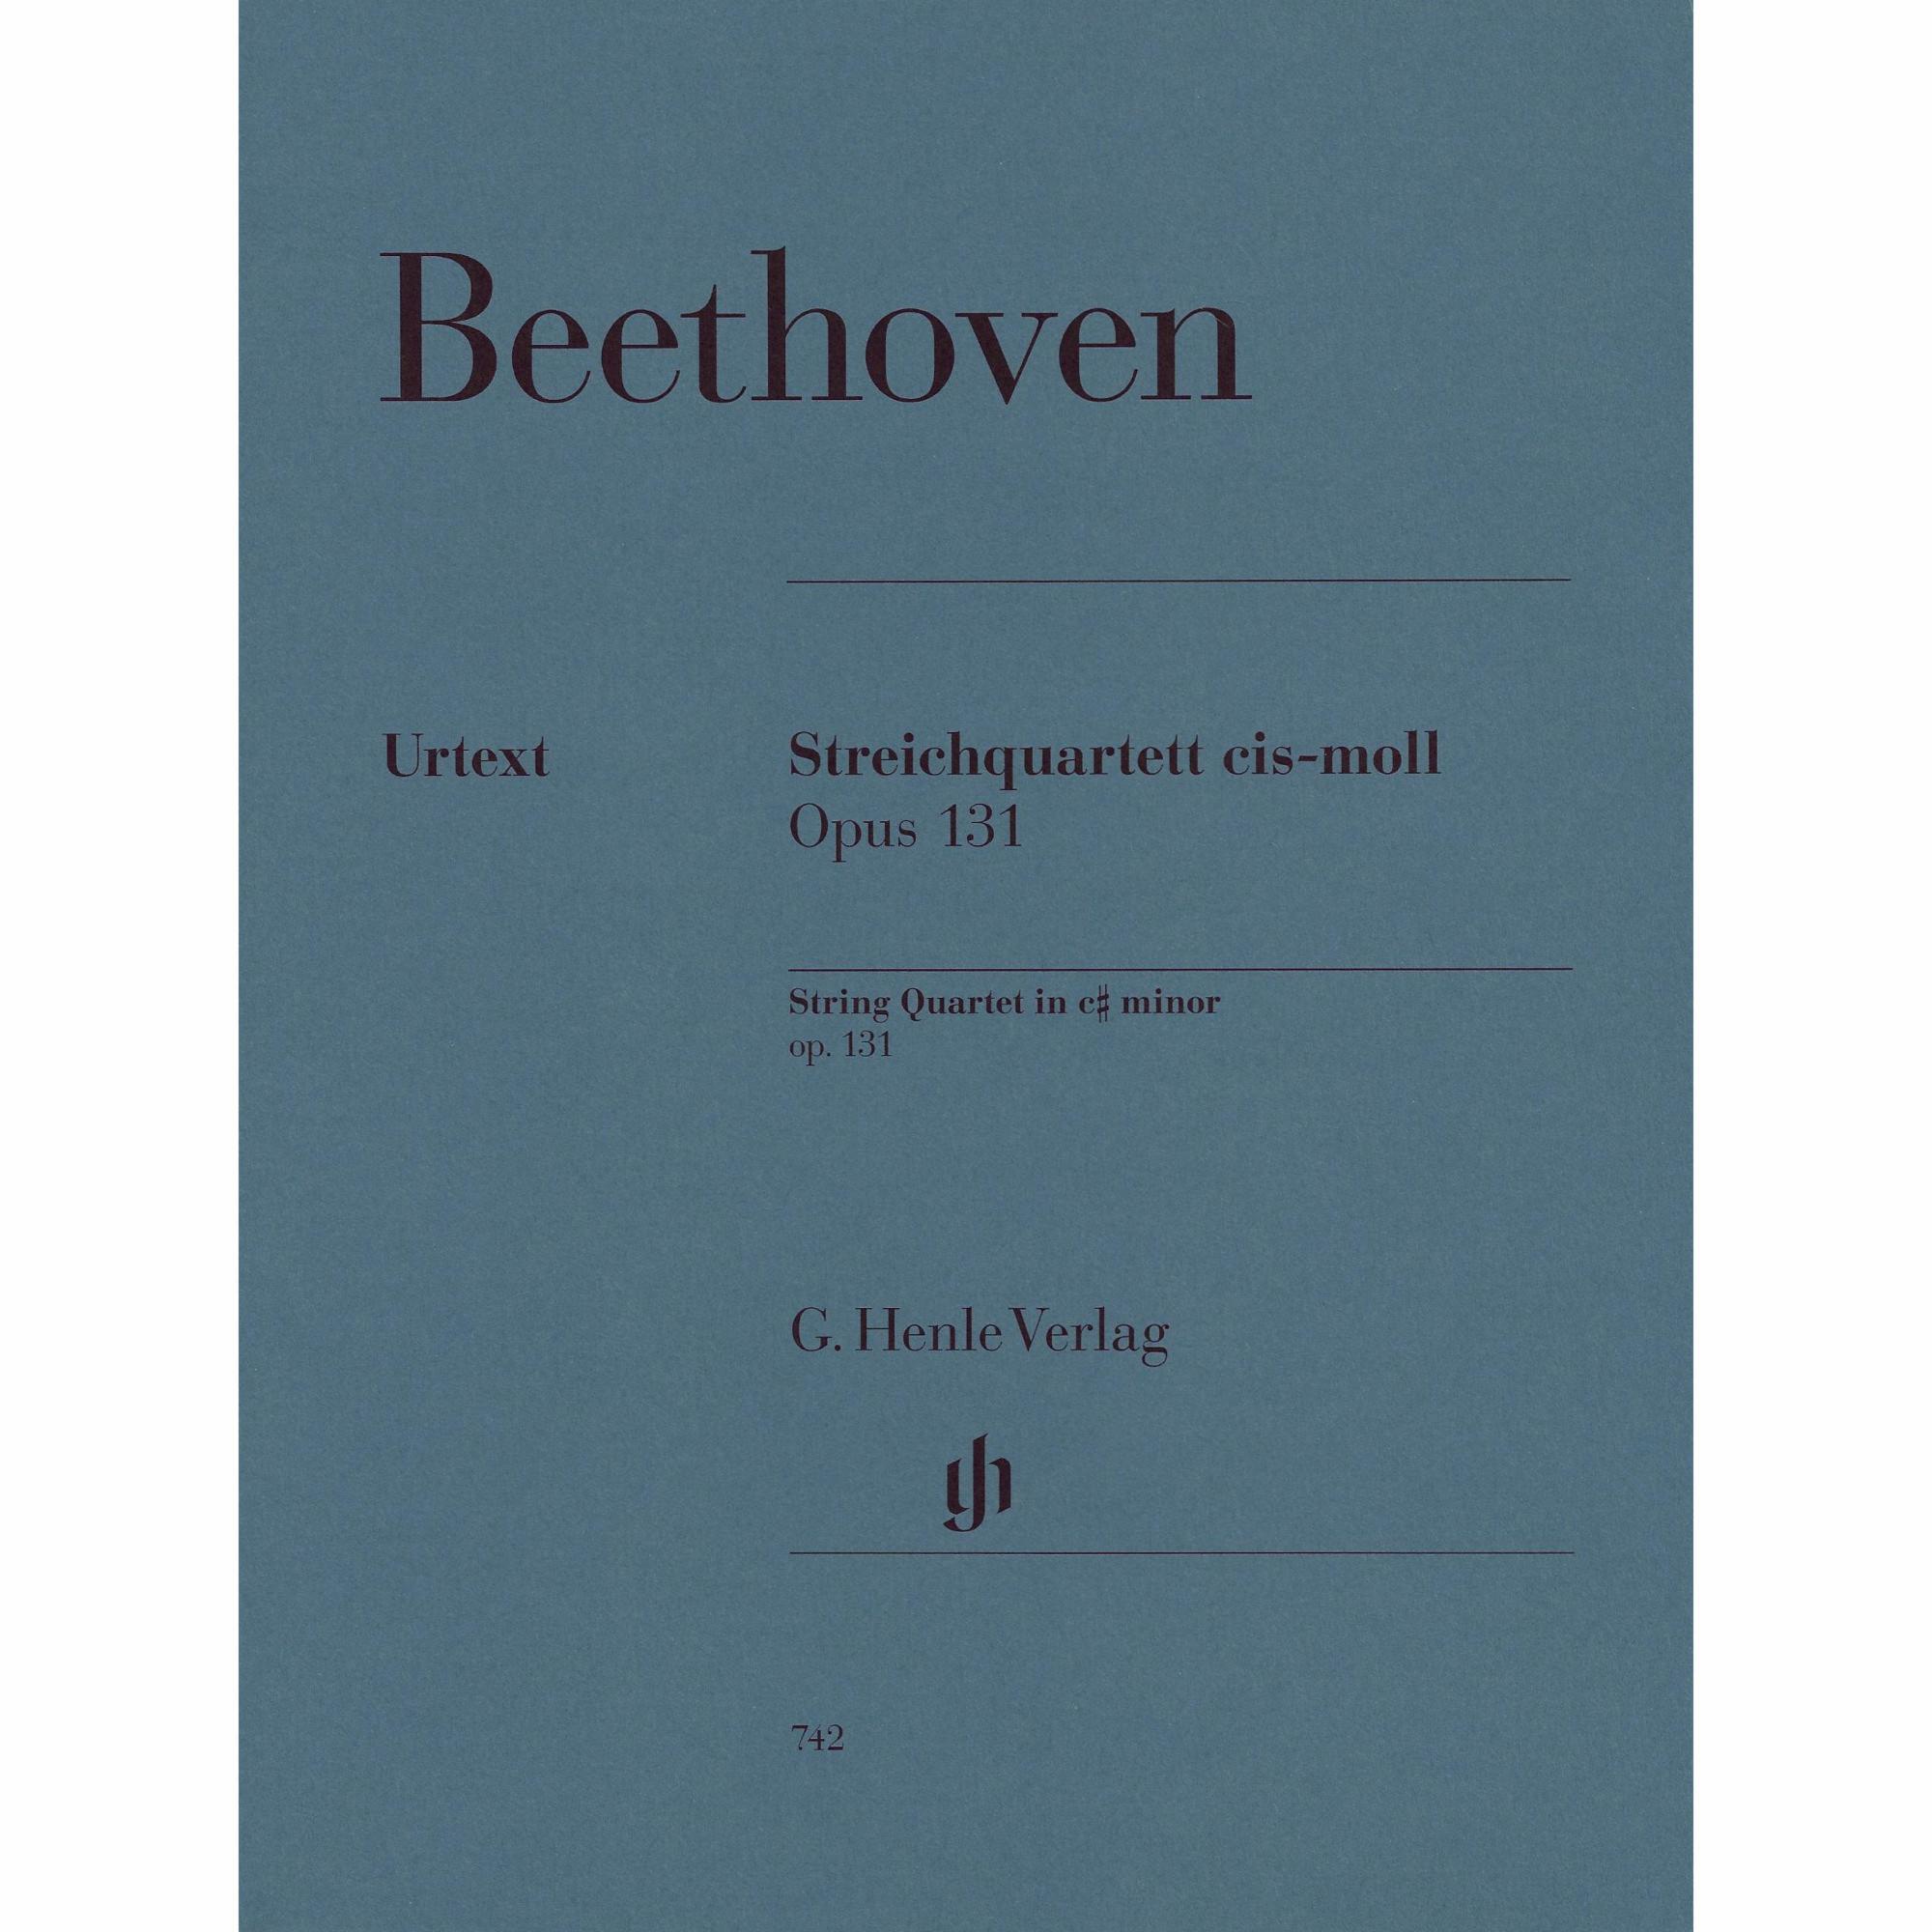 Beethoven -- String Quartet in C-sharp Minor, Op. 131